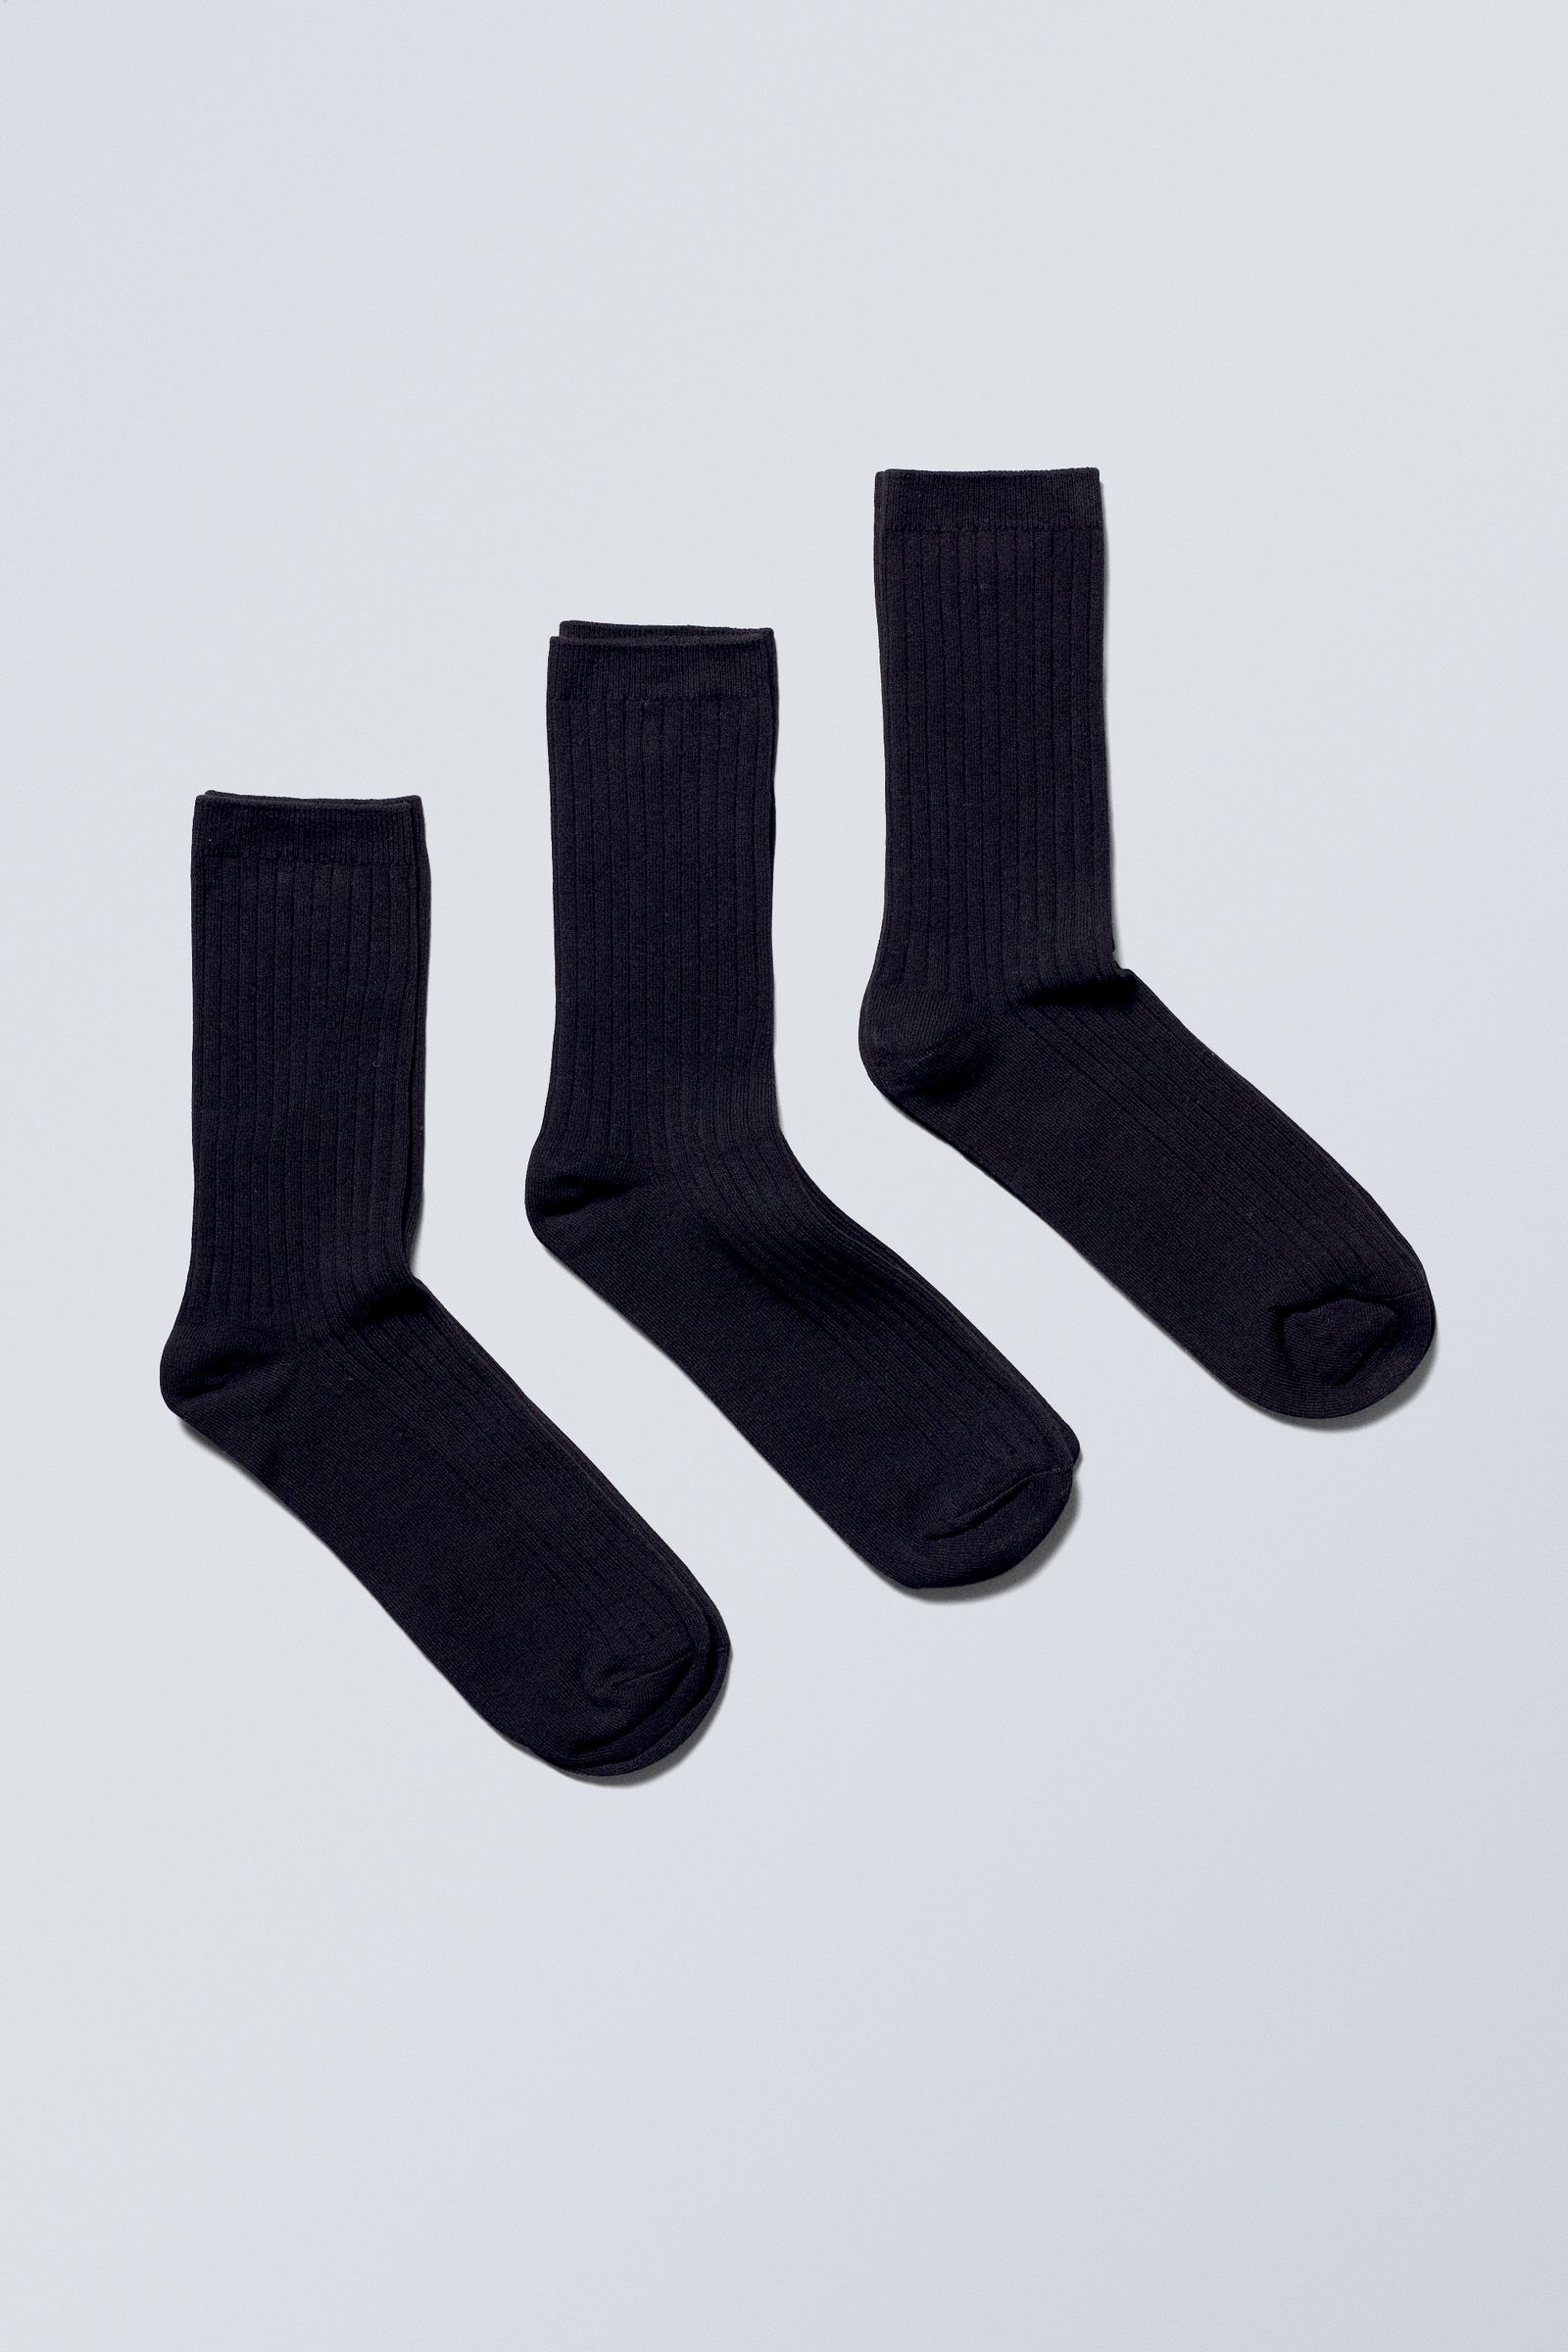 #272628 - 3pack Rib Socks